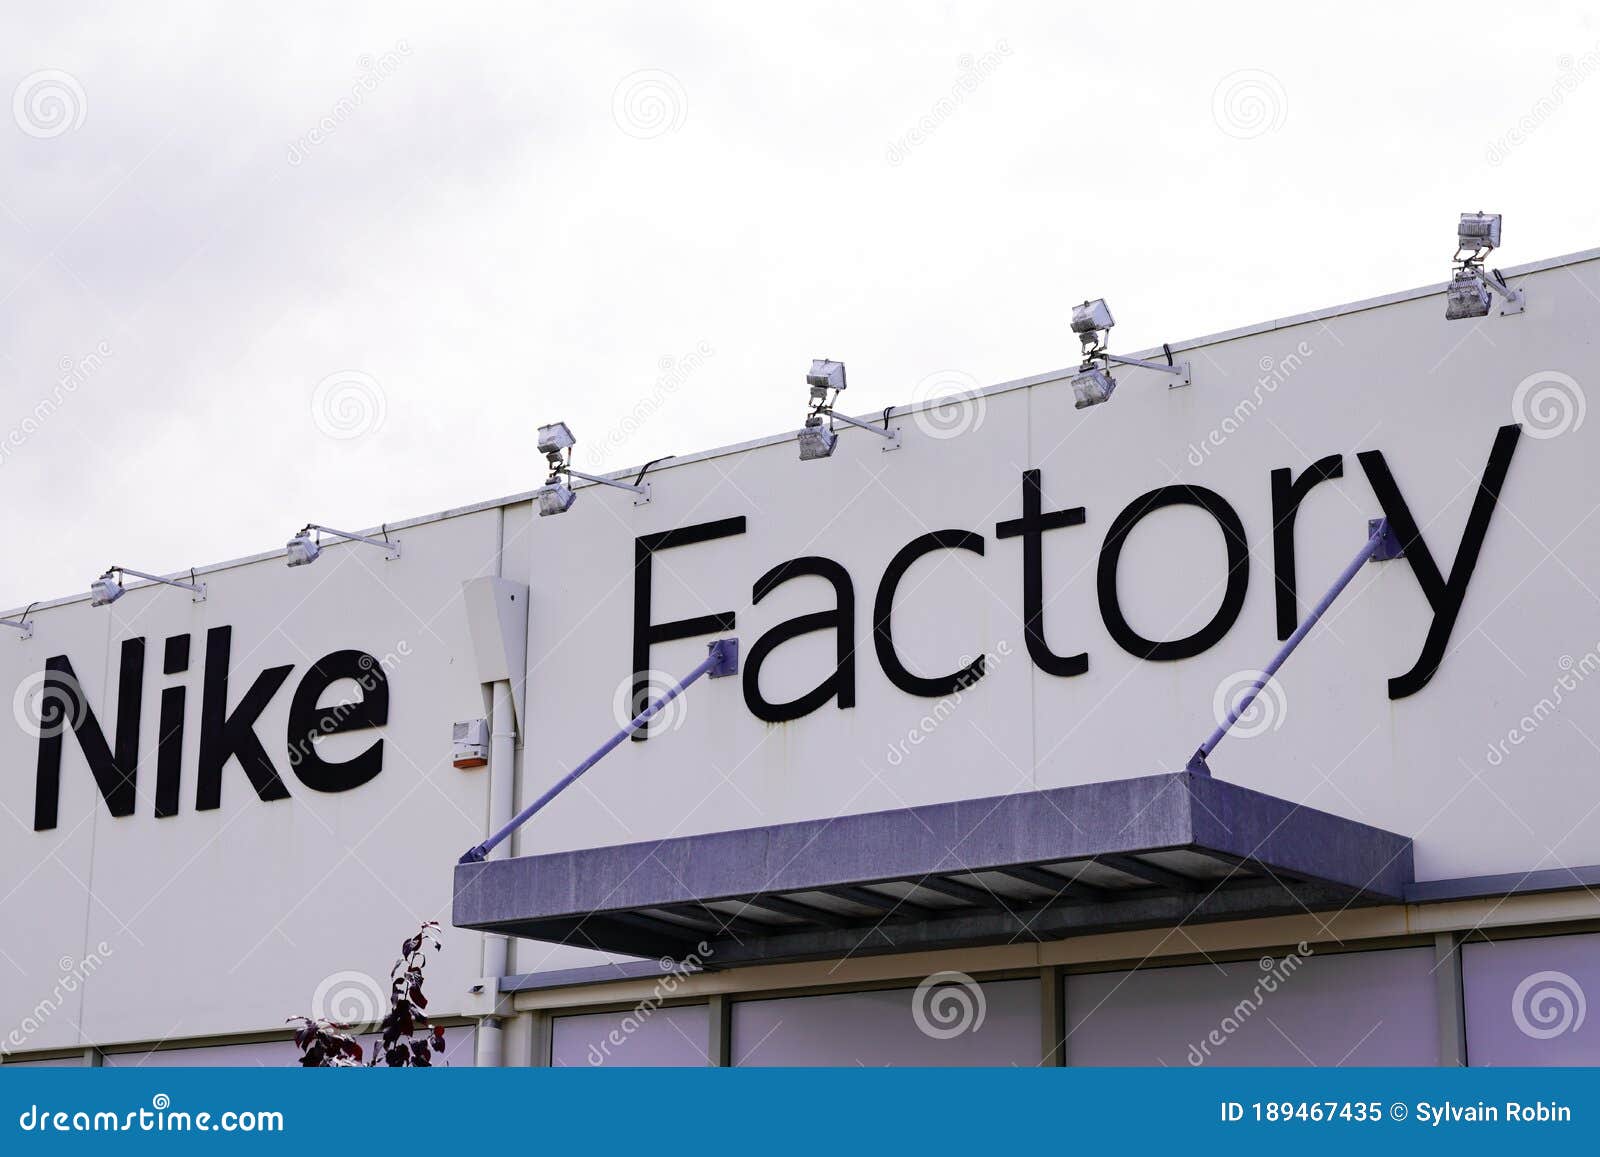 nike factory 2019